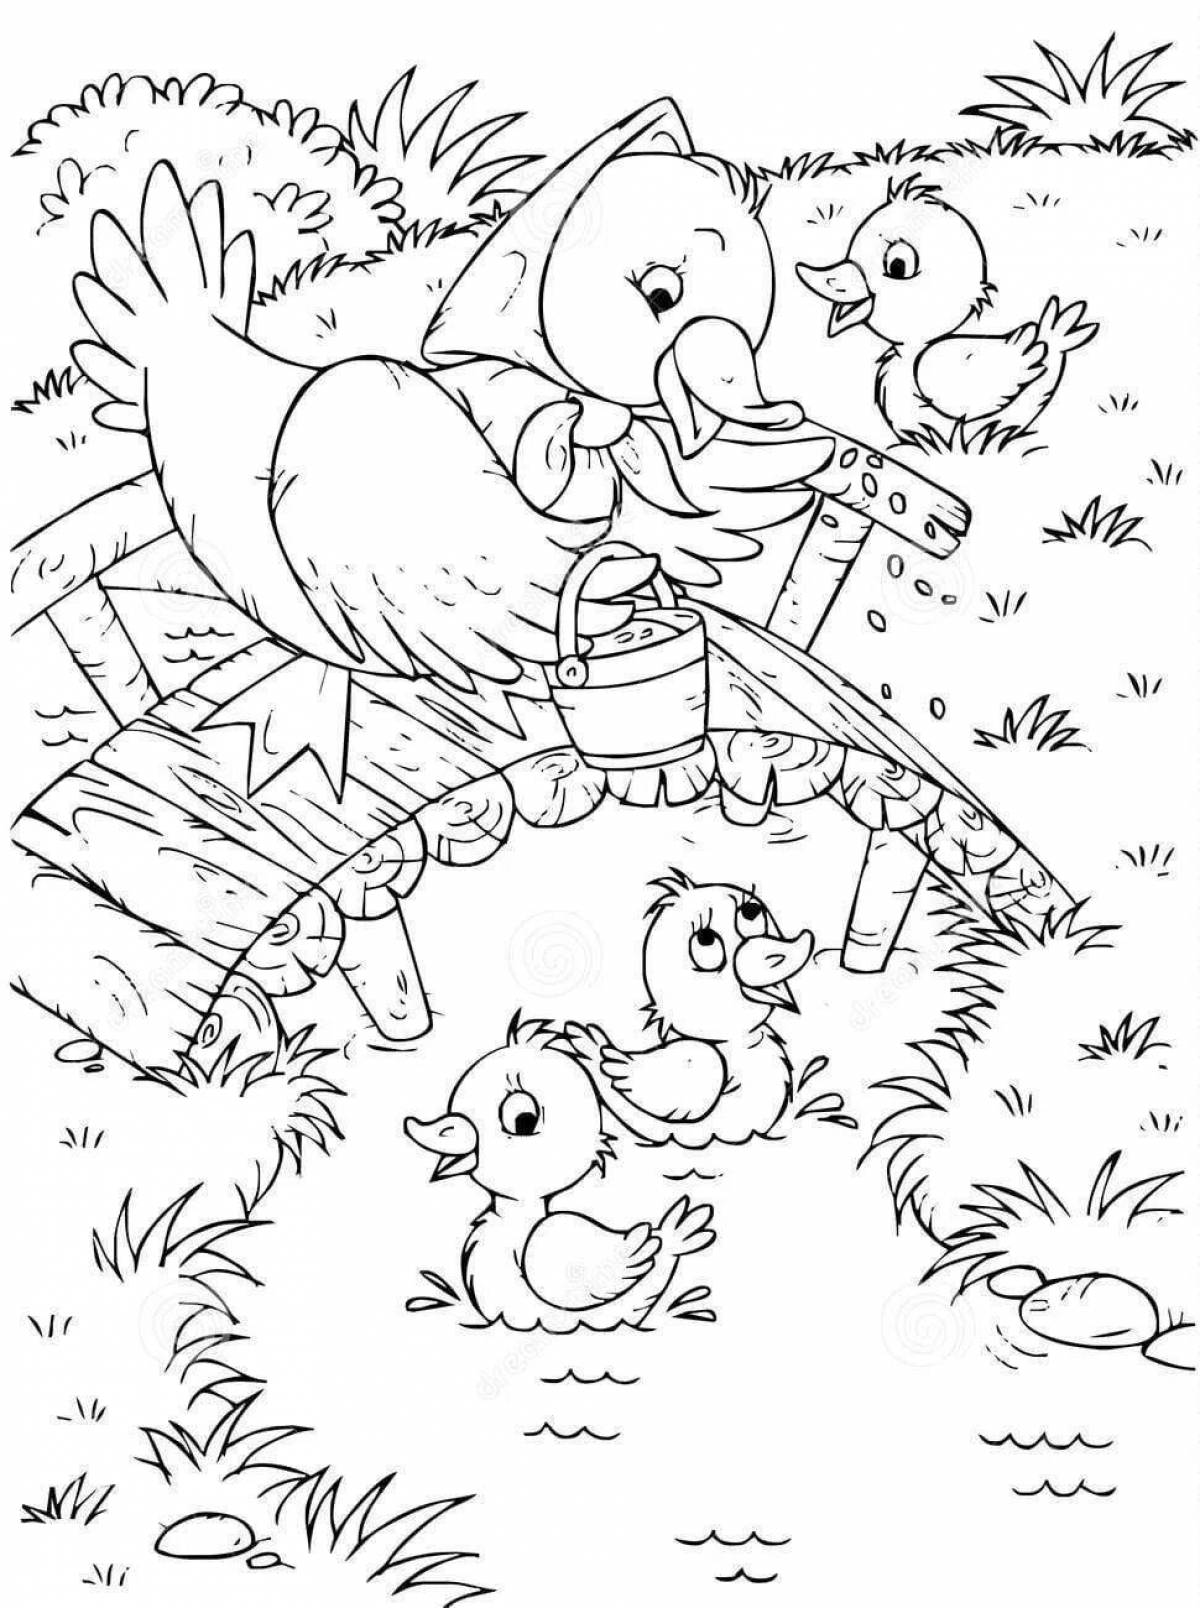 Joyful ugly duckling coloring for kids